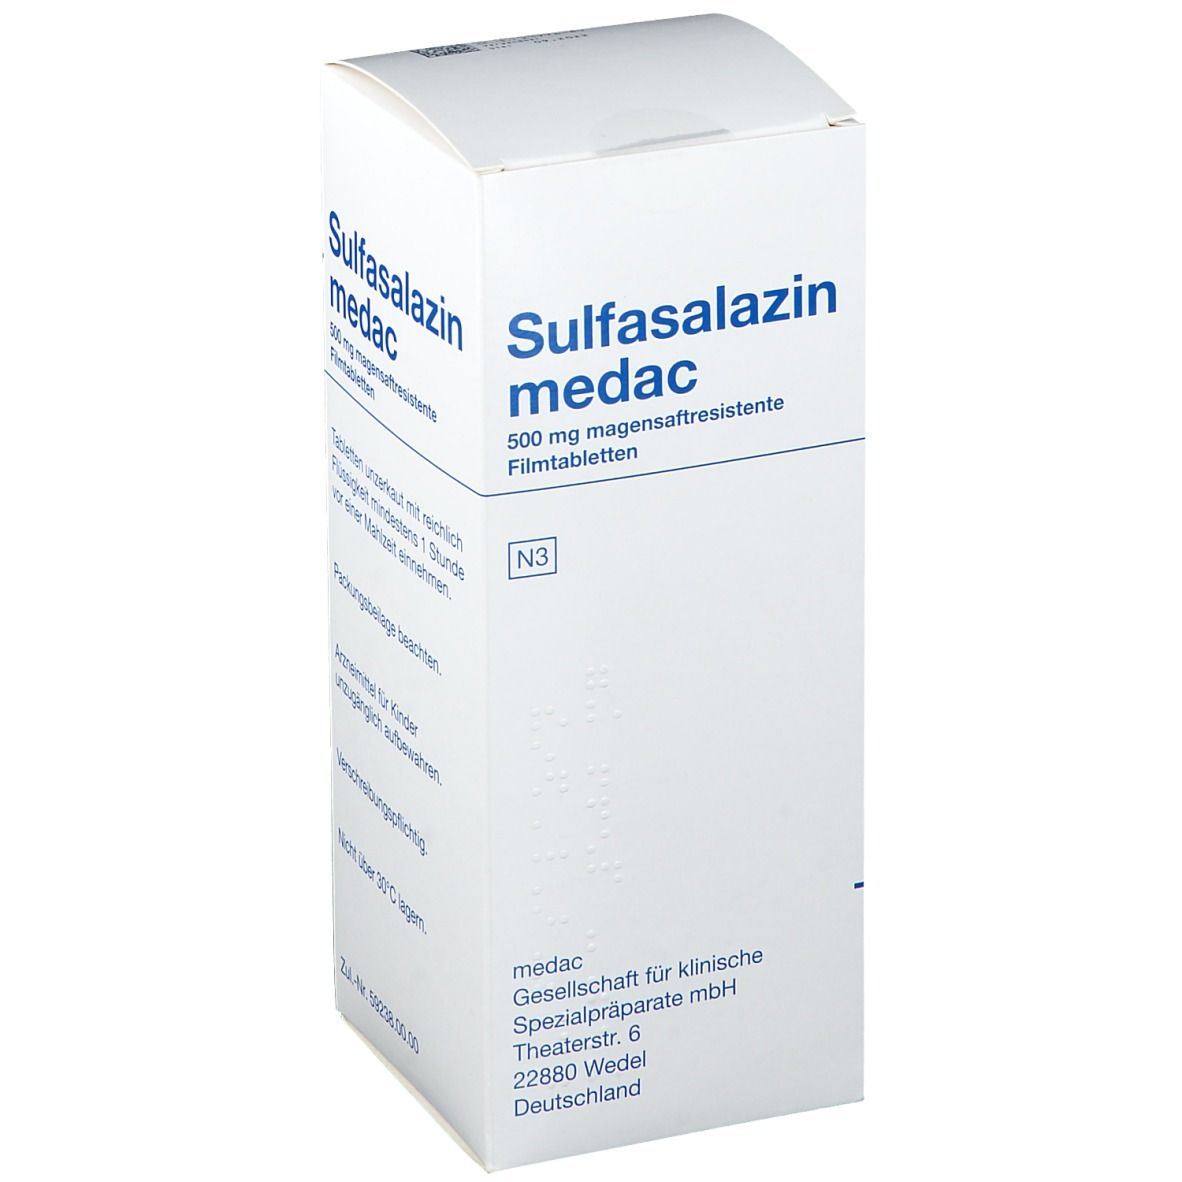 Sulfasalazin medac 500 mg